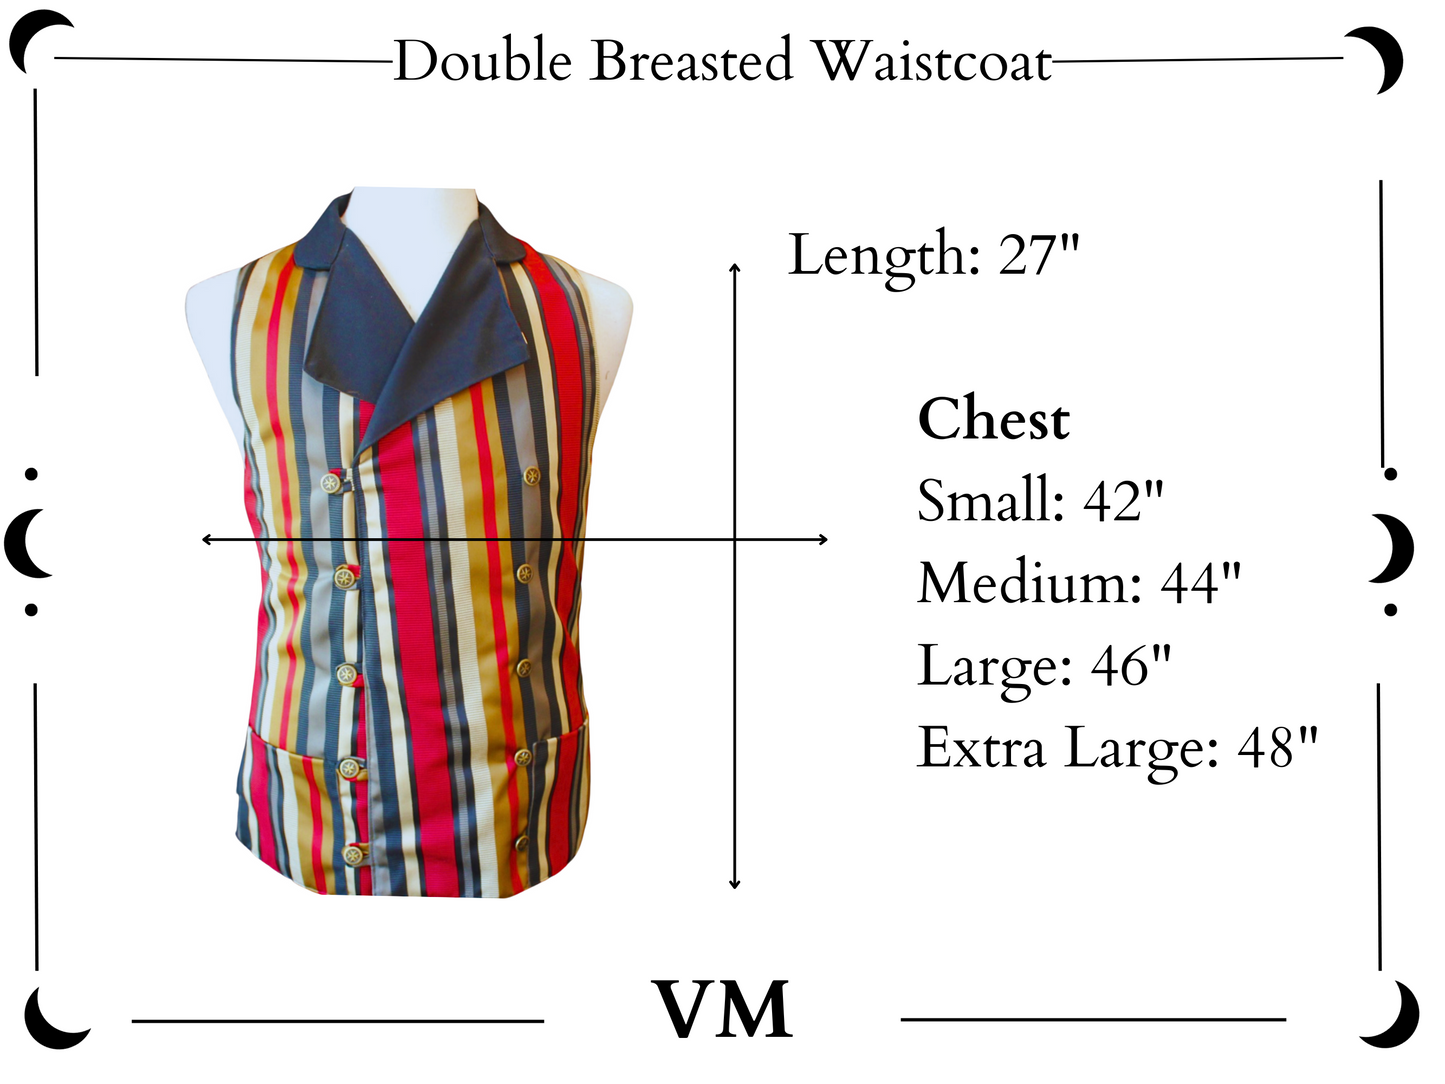 The VM Double Breasted Waistcoat